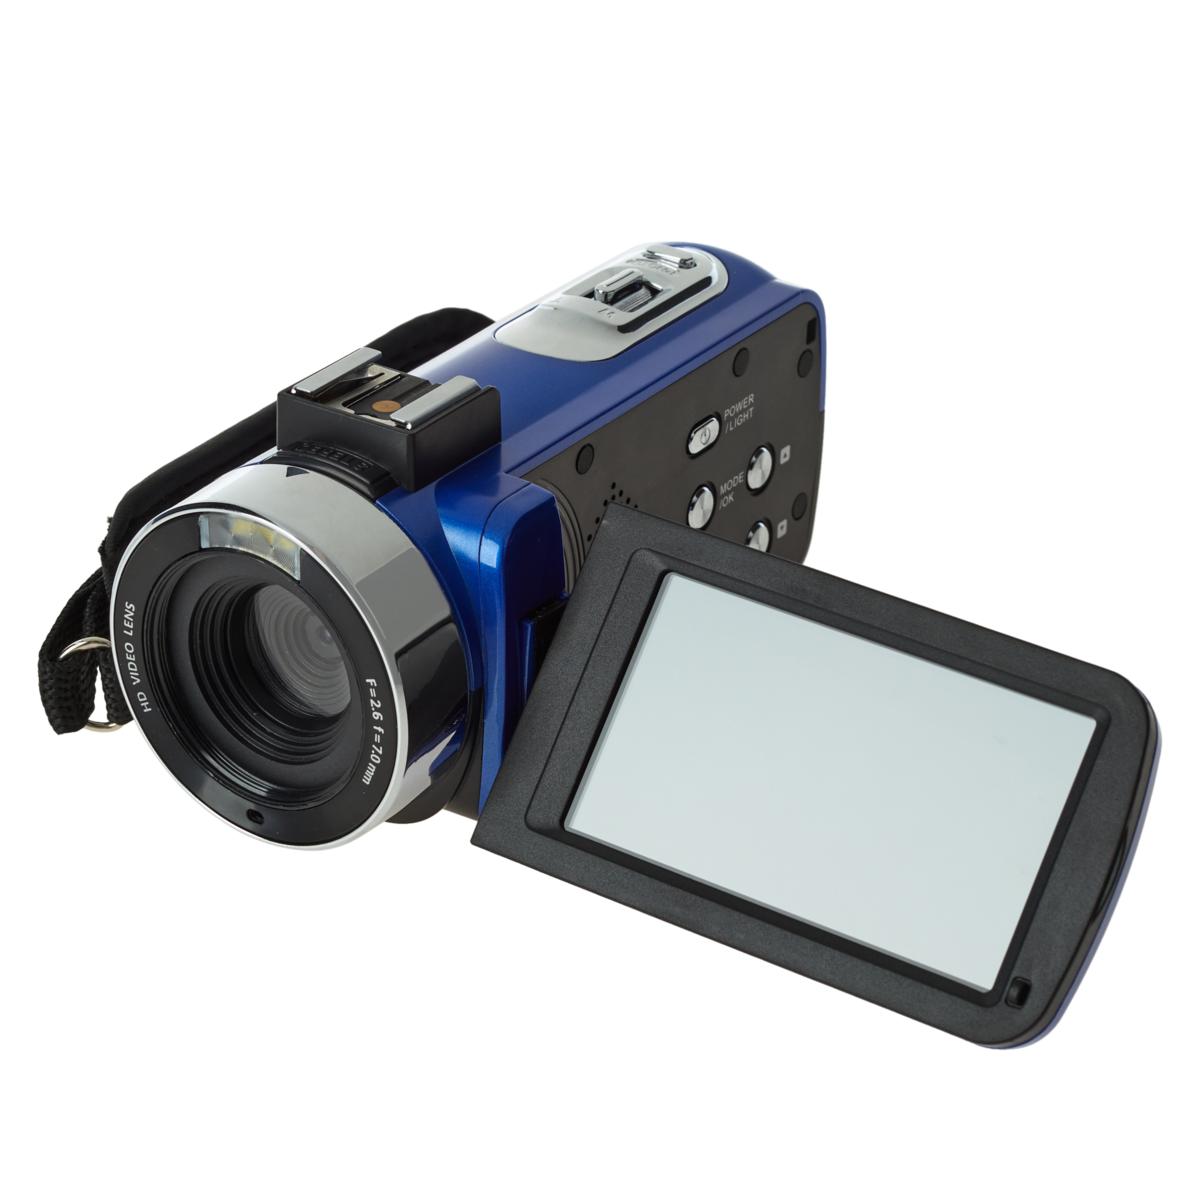 4k-digital-camcorder-id995hd-v1-blue-4